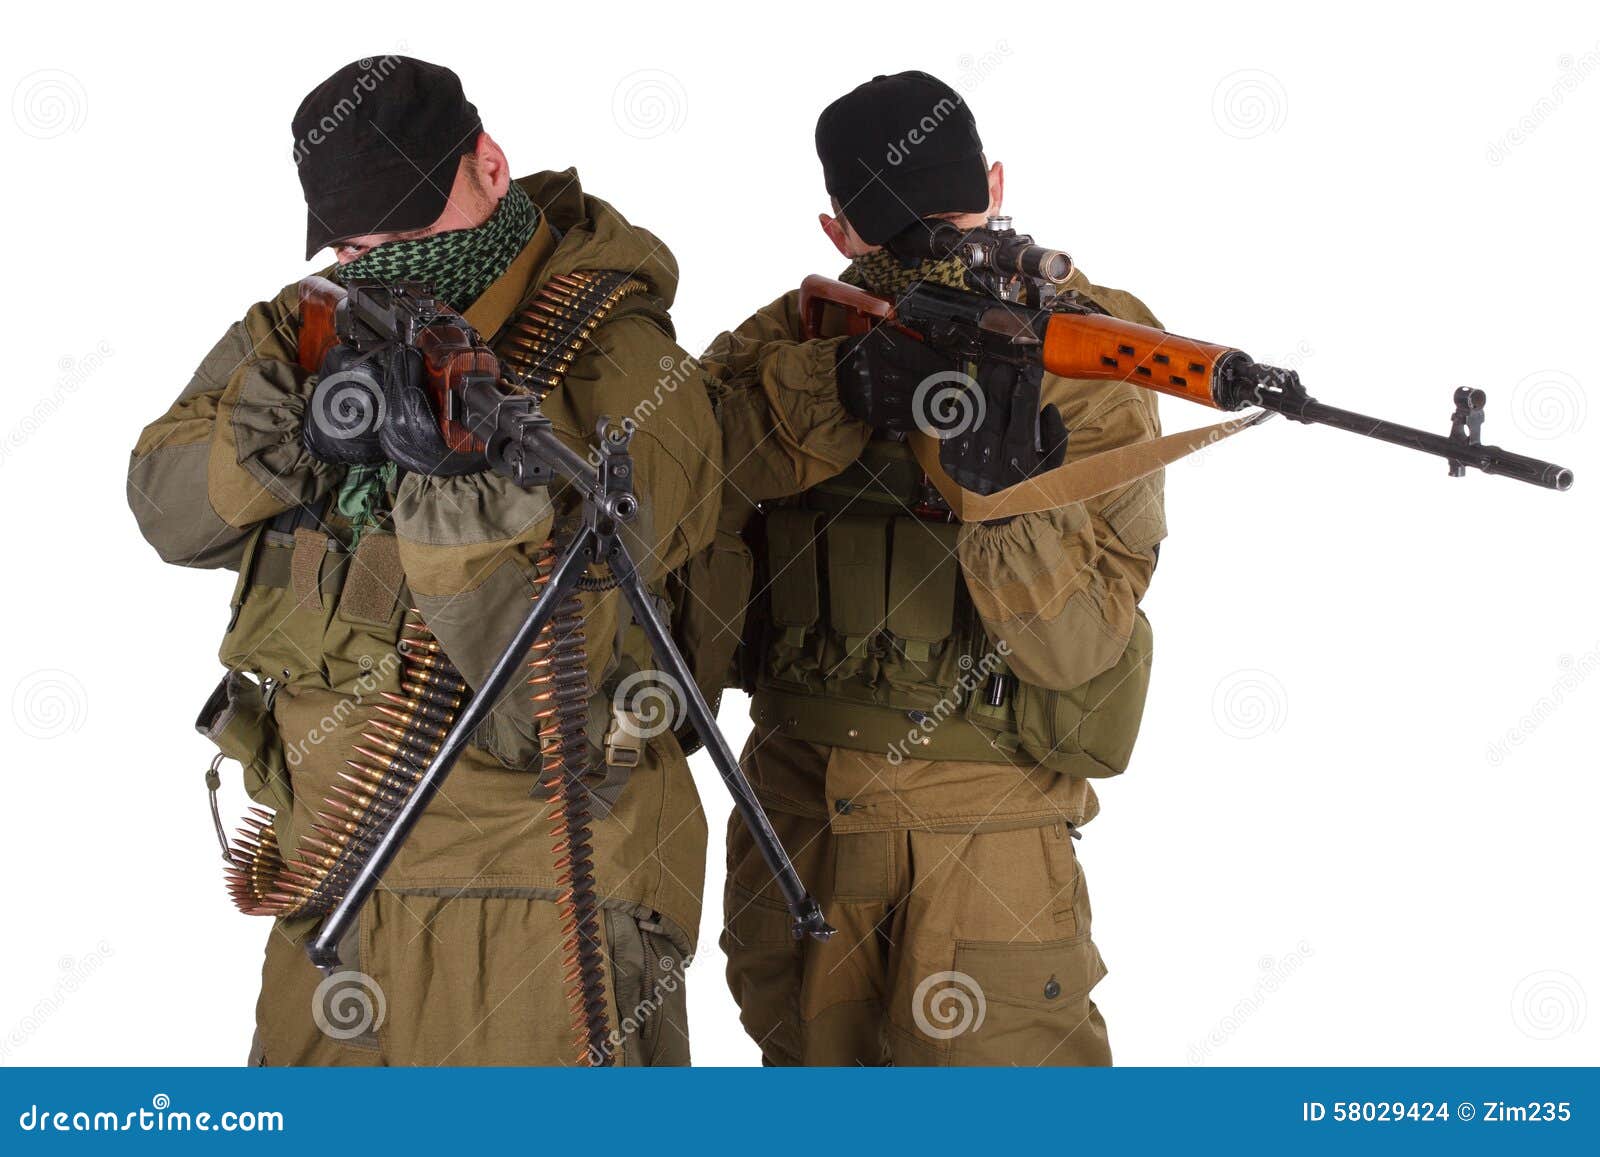 insurgent sniper pair with svd rifle and rpd machine gun